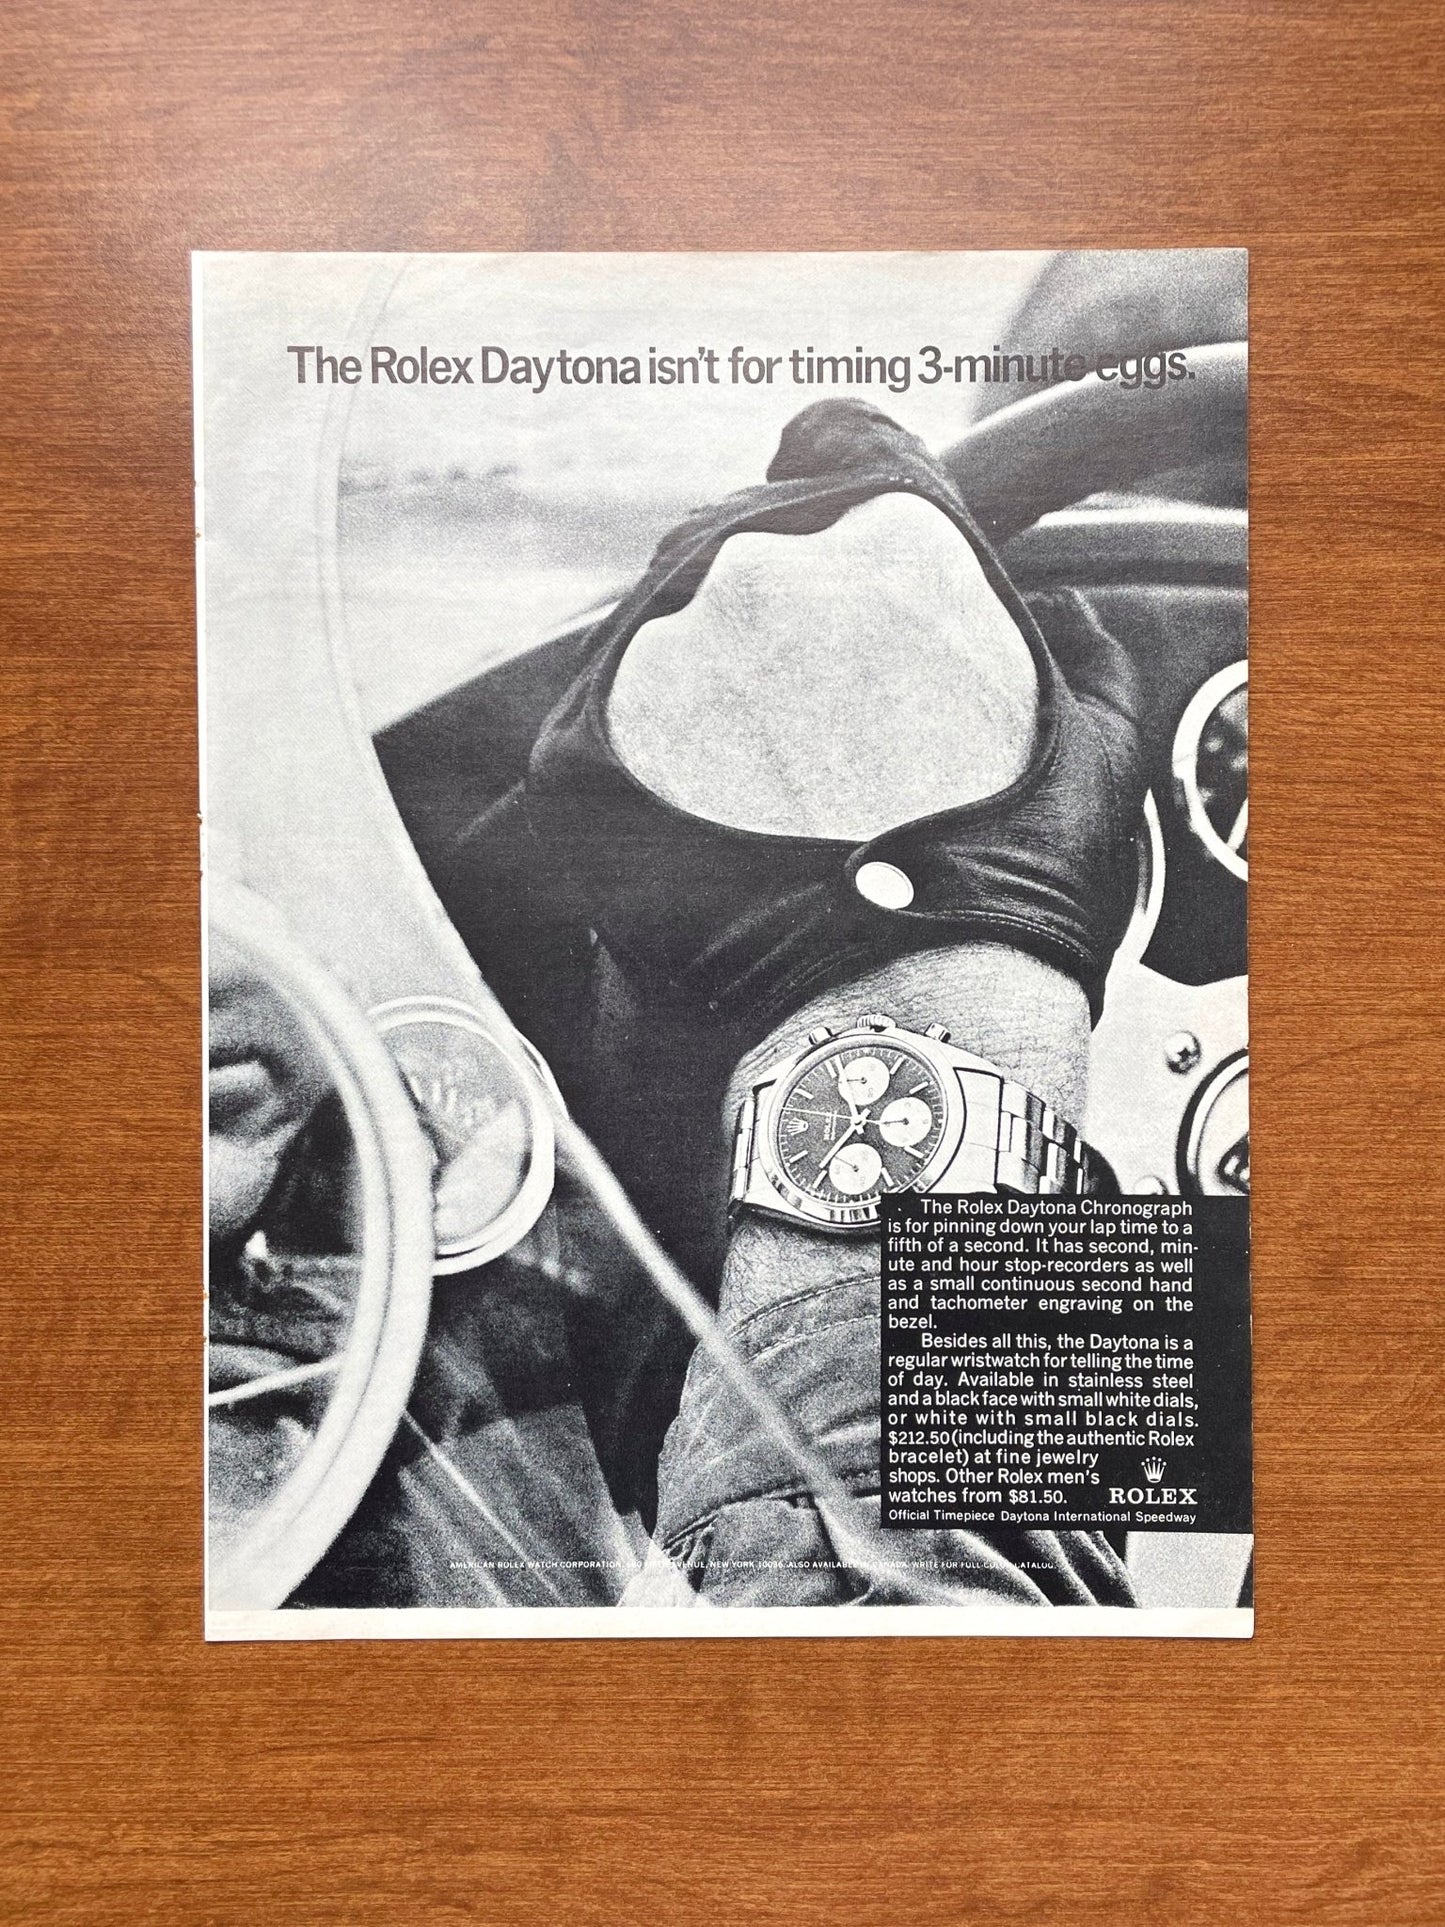 1967 Rolex Daytona "isn't for timing 3 - minute eggs." Advertisement